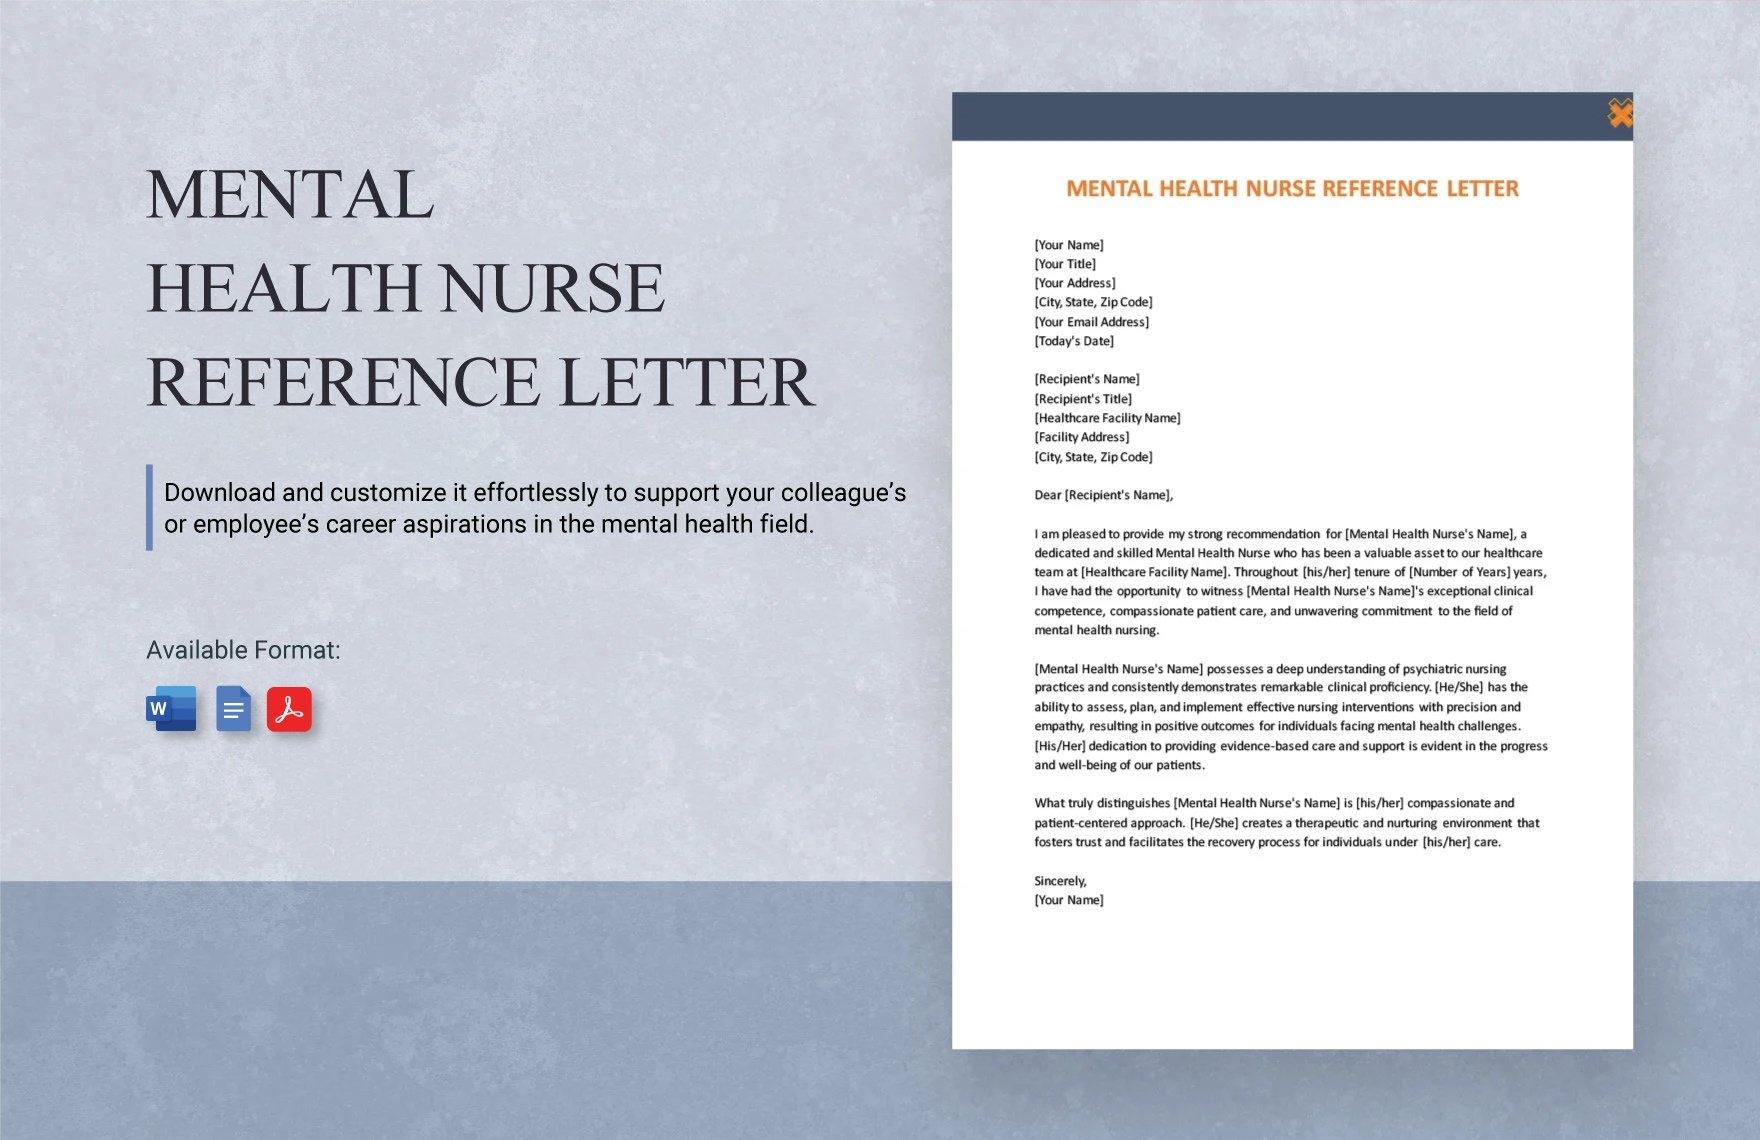 Mental Health Nurse Reference Letter in Word, Google Docs, PDF